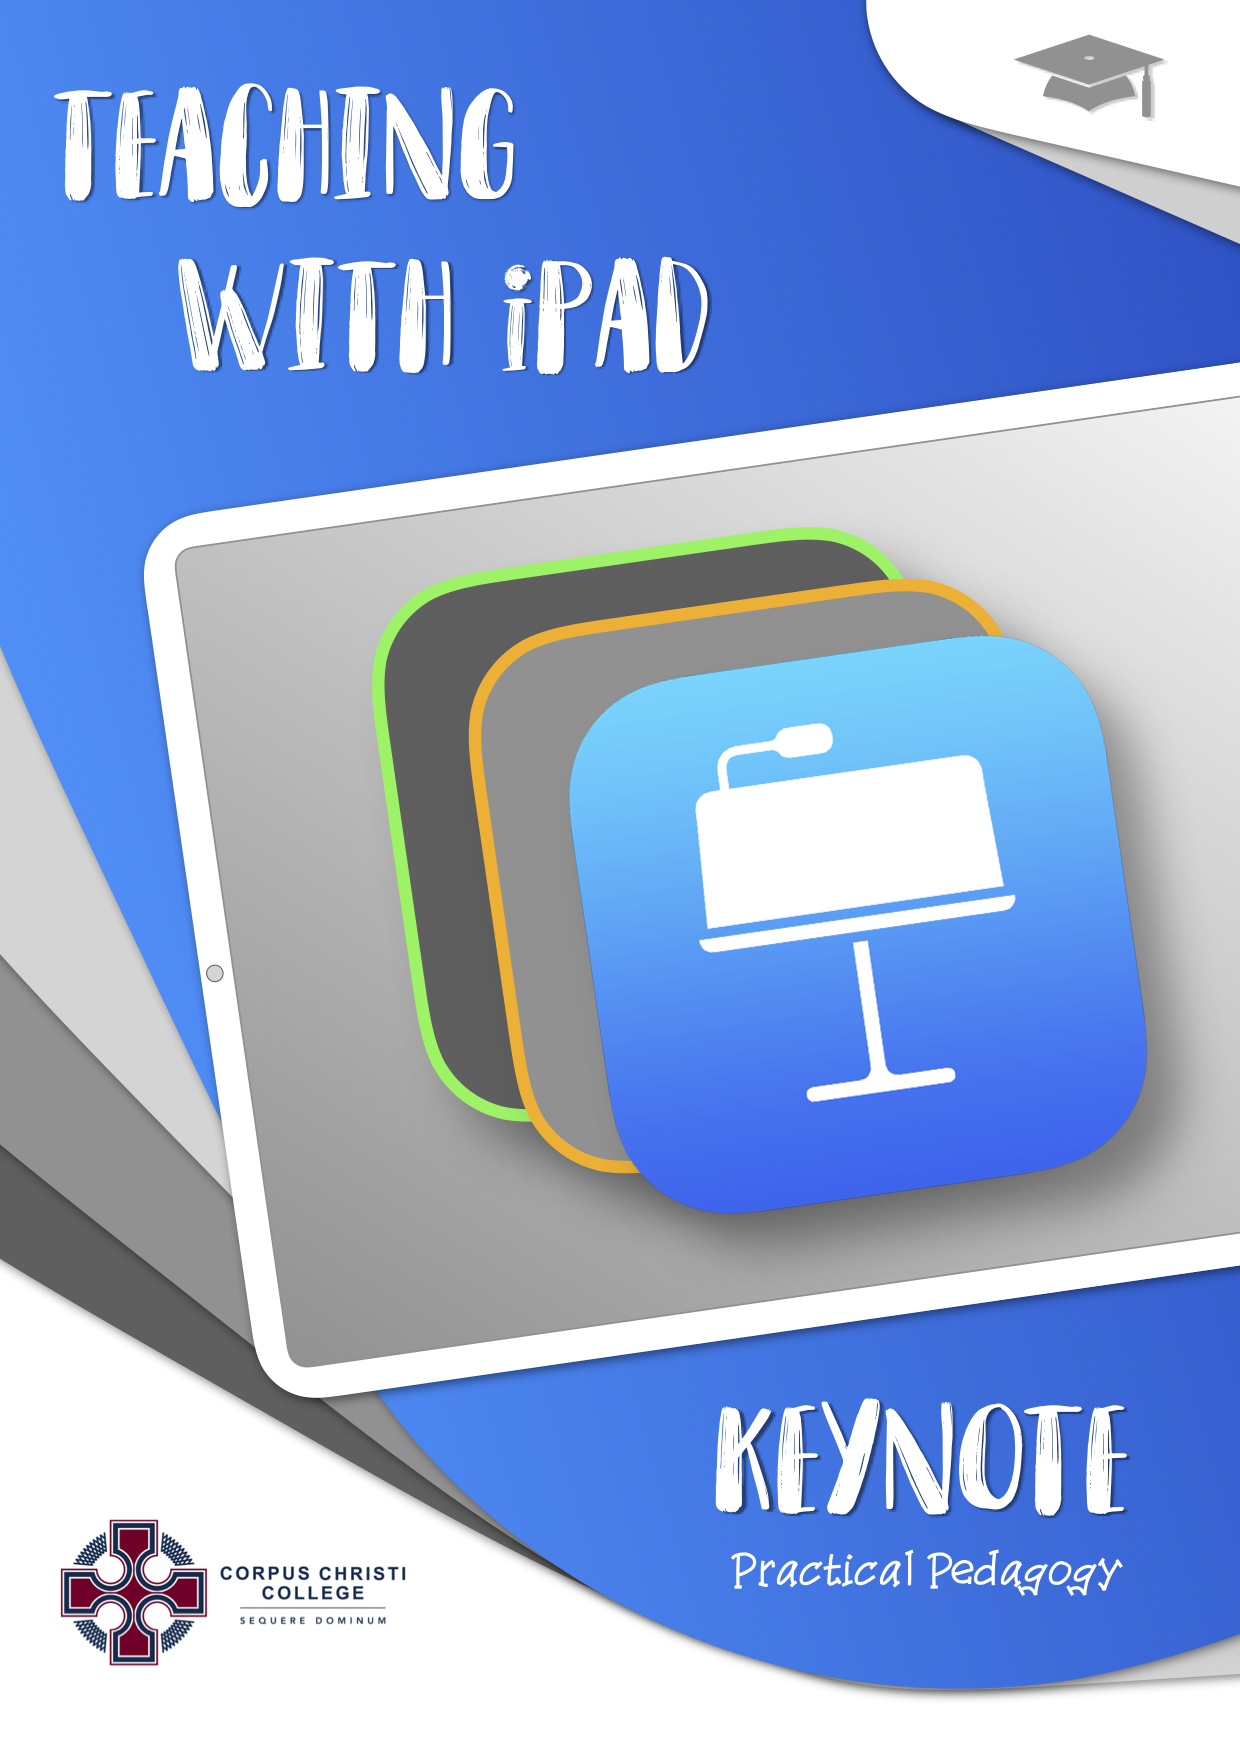 Teaching with iPad Keynote.jpg